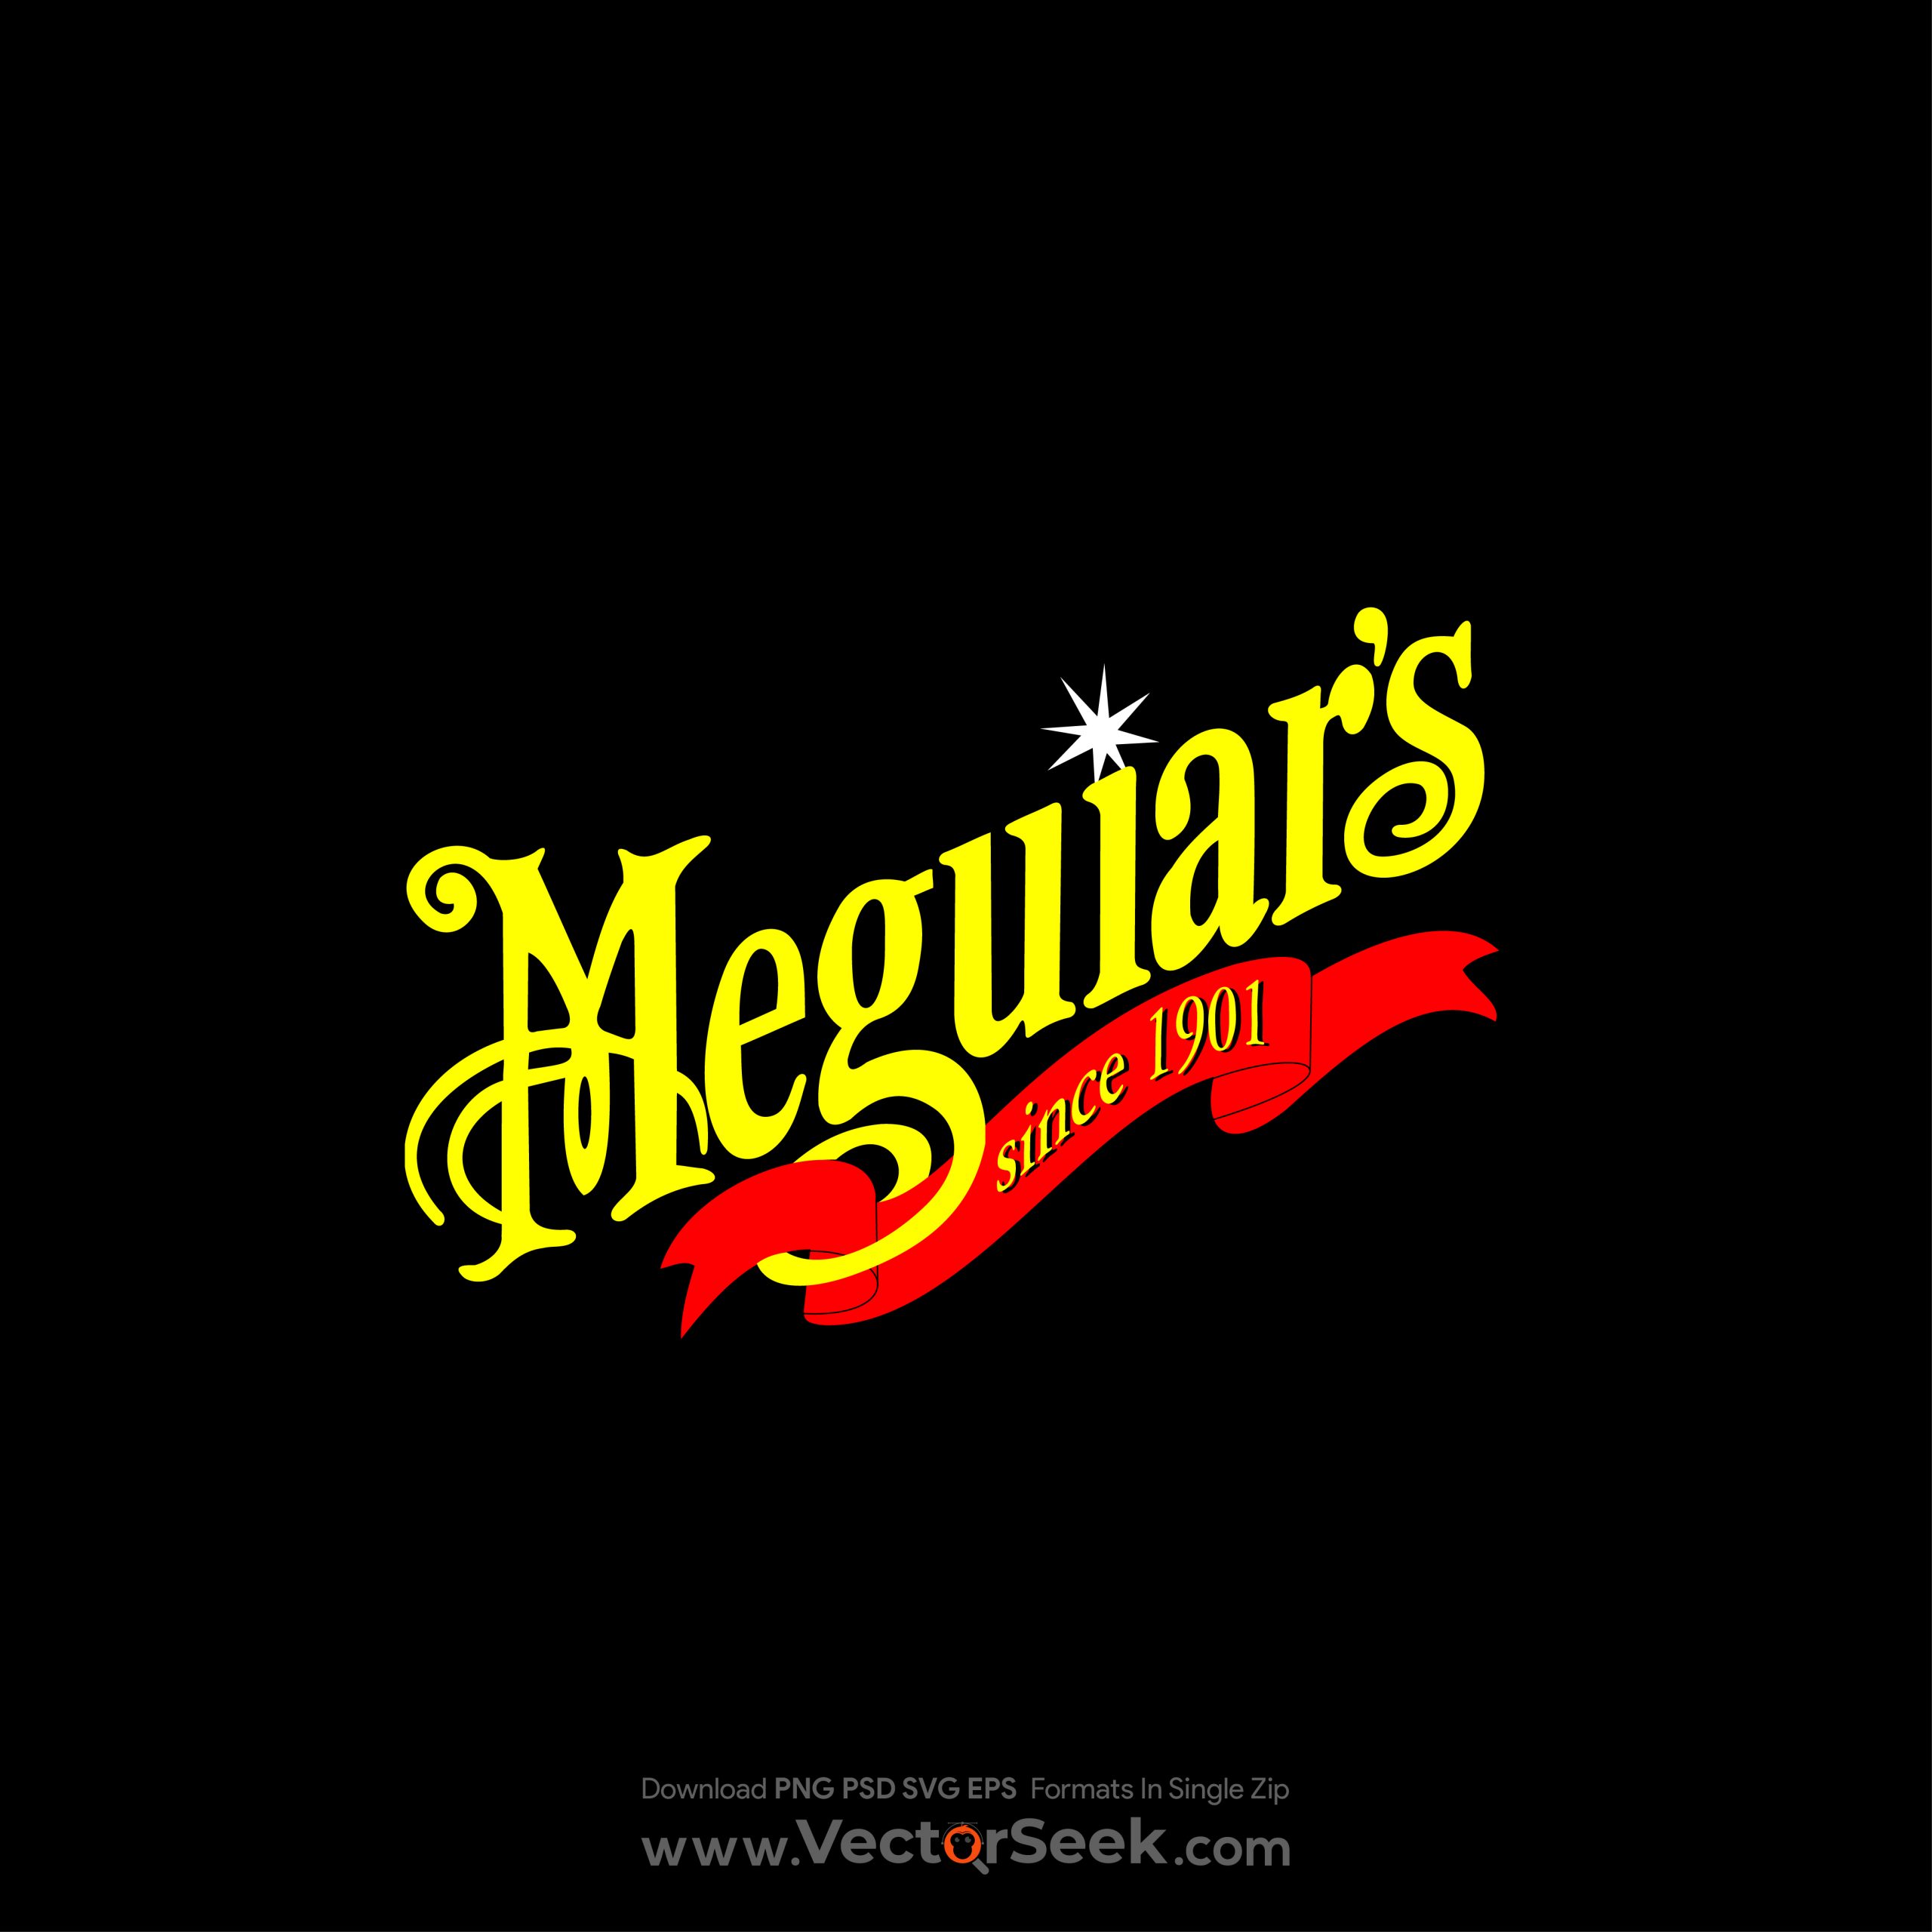 Meguiar's Logo Vector - (.Ai .PNG .SVG .EPS Free Download)